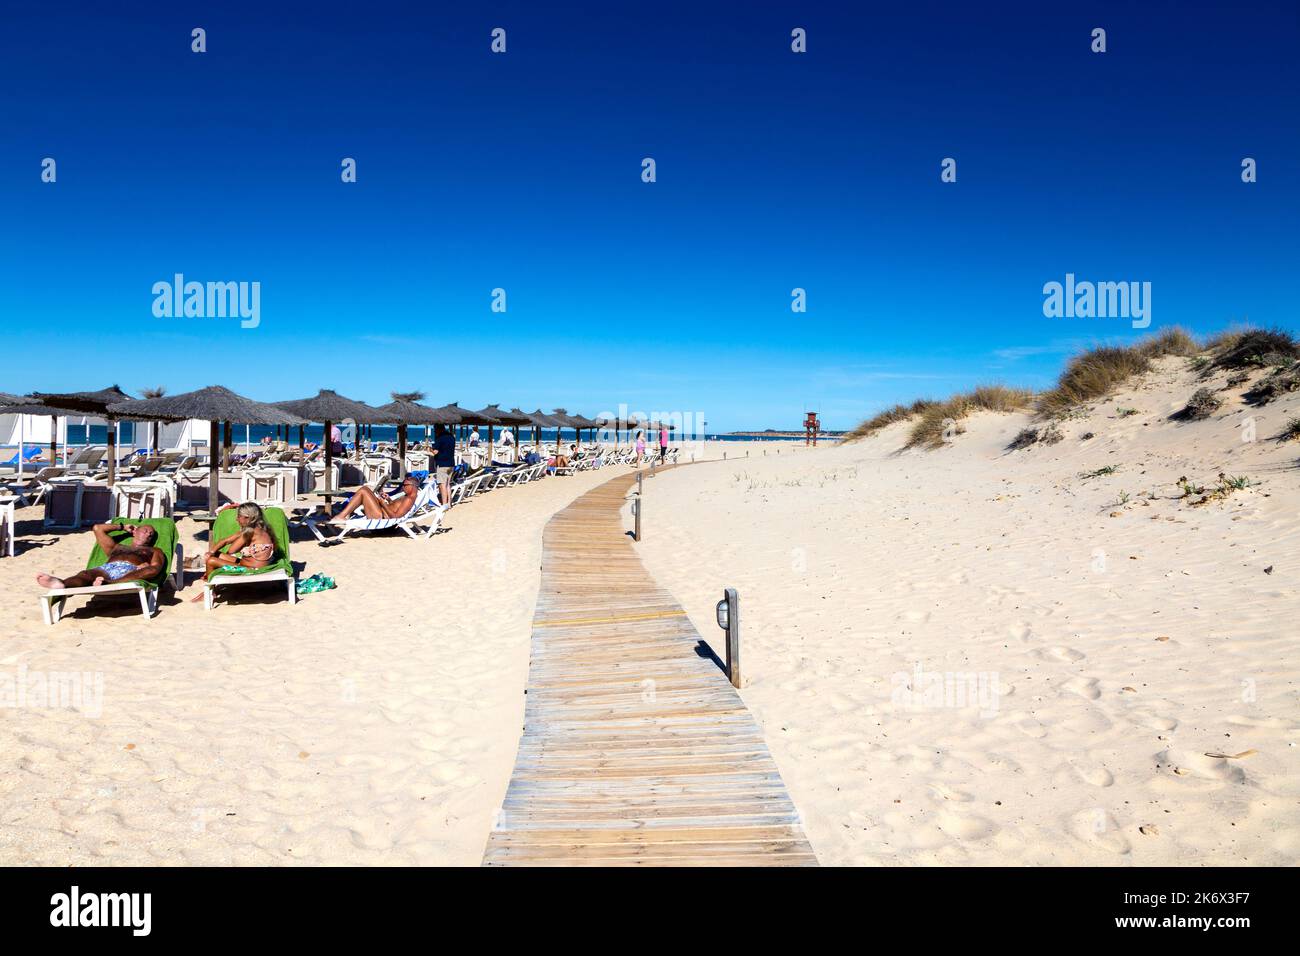 Wooden walkway and straw parasols at Playa de la Barrosa, Cadiz, Spain Stock Photo